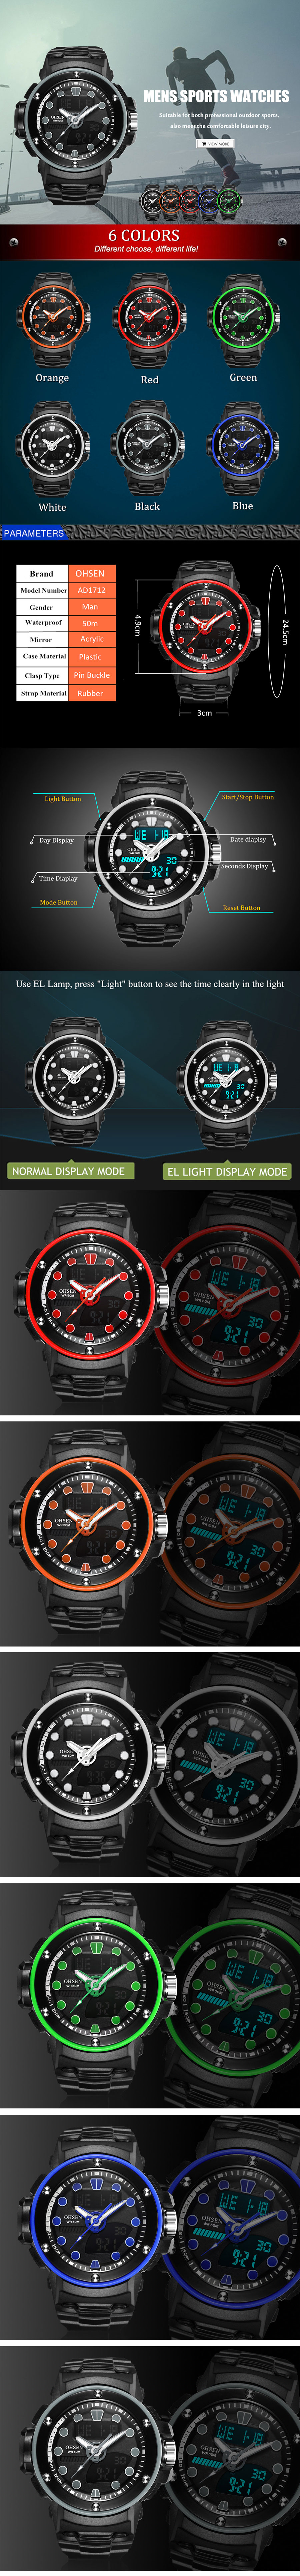 OHSEN-AD1712-Dual-Display-Digital-Watch-Outdoors-Sport-Men-Luminous-Alarm-Waterproof-Watch-1314348